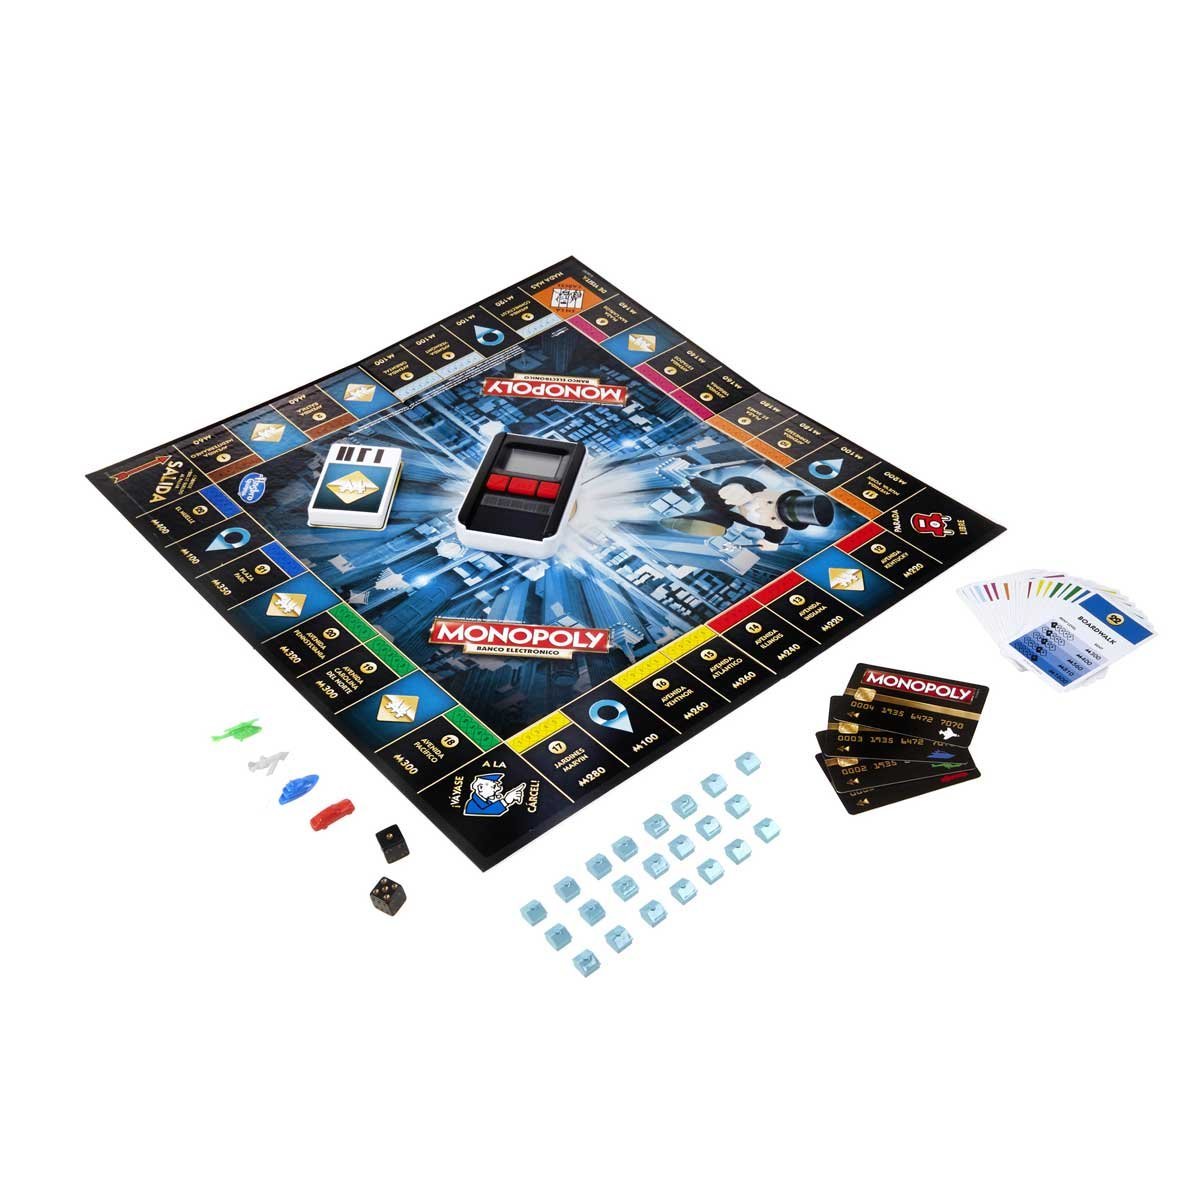 Monopoly Banco Electr&oacute;nico Hasbro